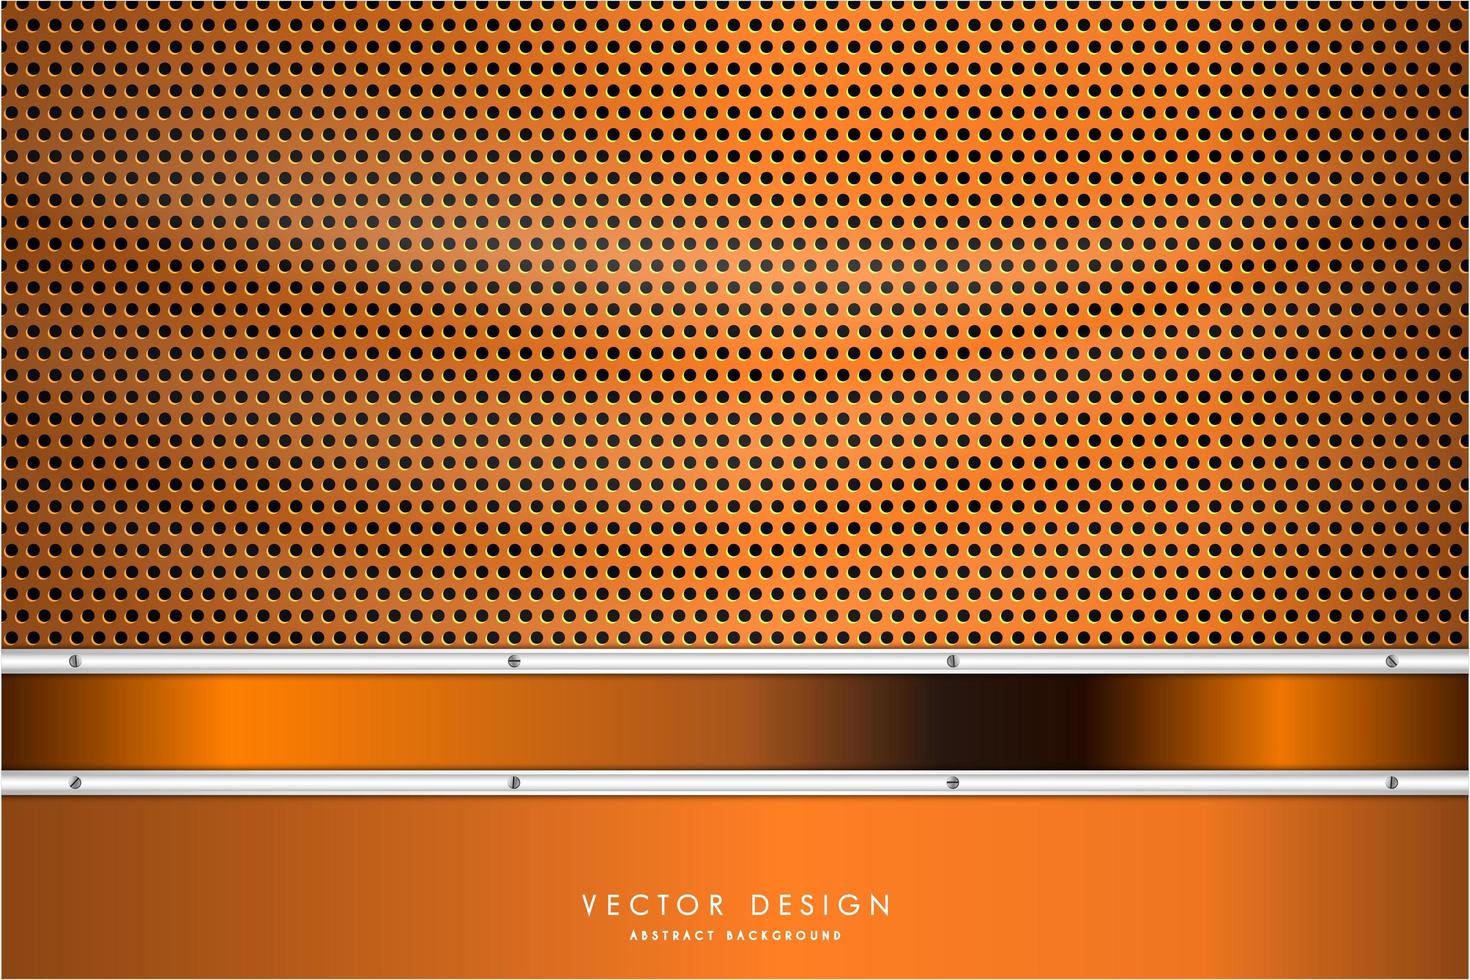 borda laranja e prata com textura de fibra de carbono vetor